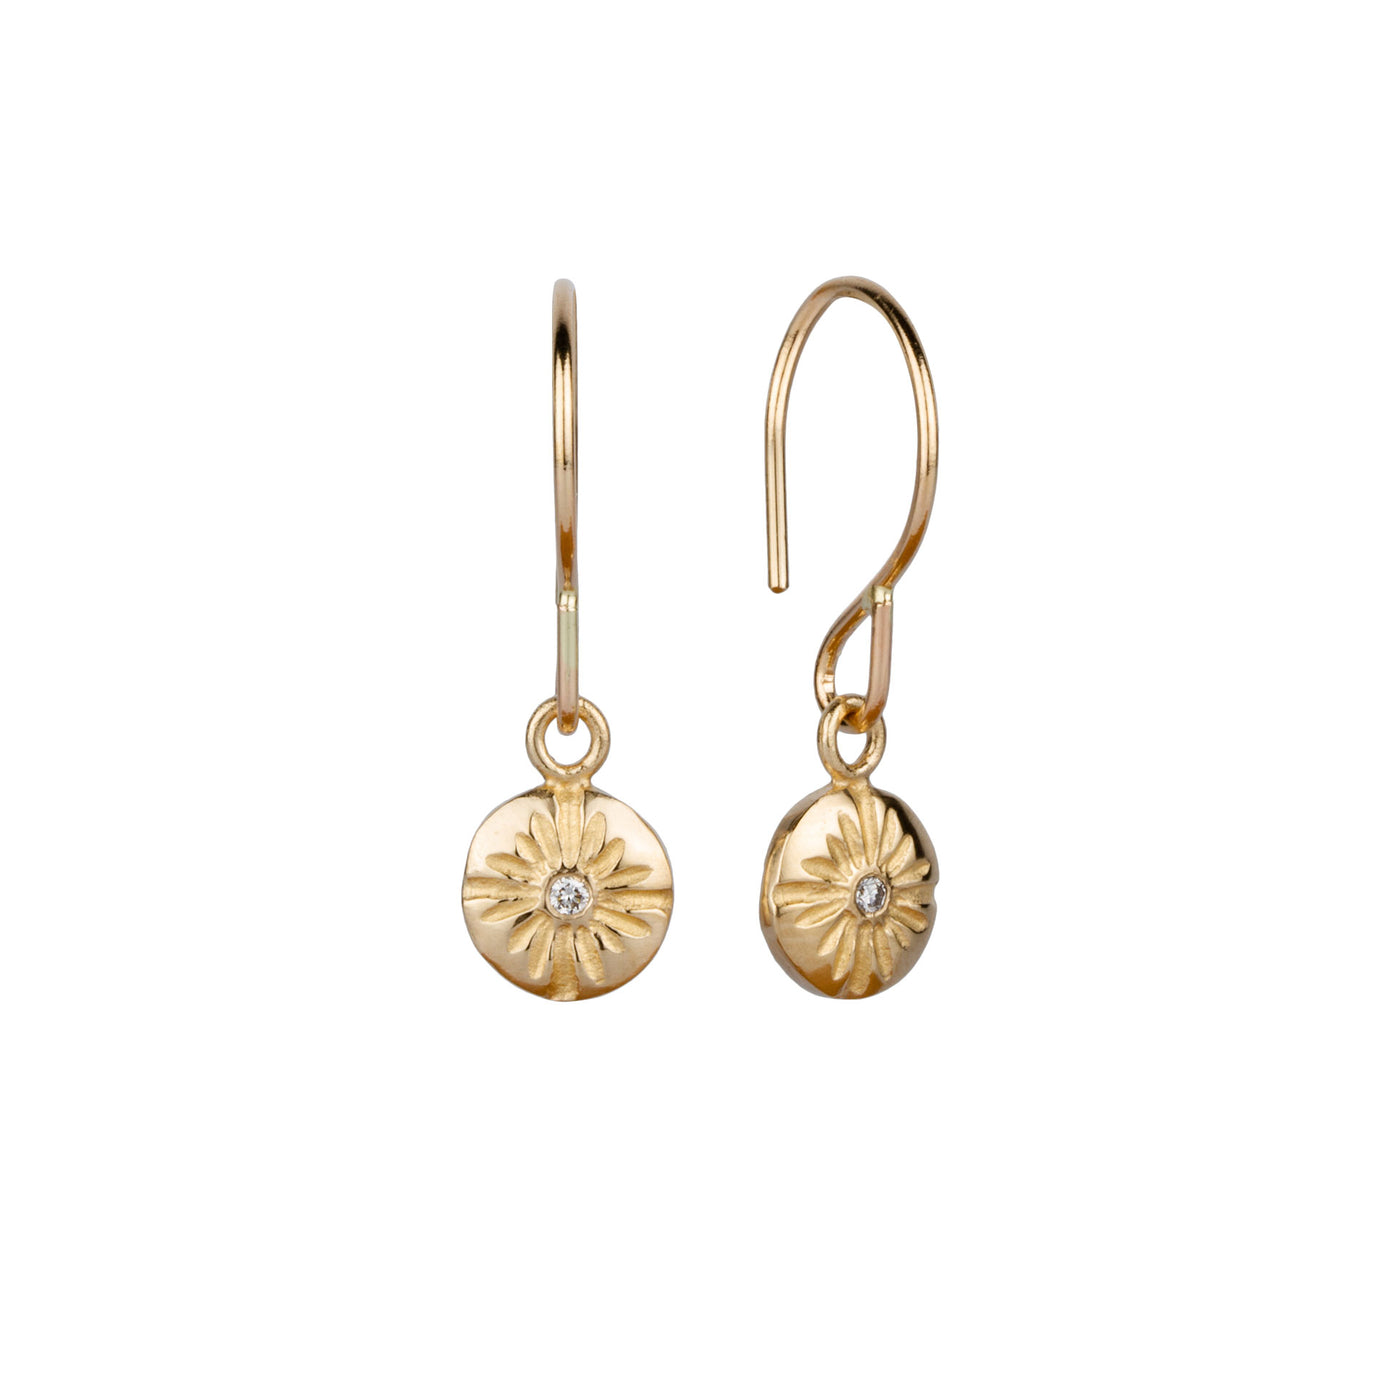 Small Lucia Rose Gold Stud Earrings – Corey Egan